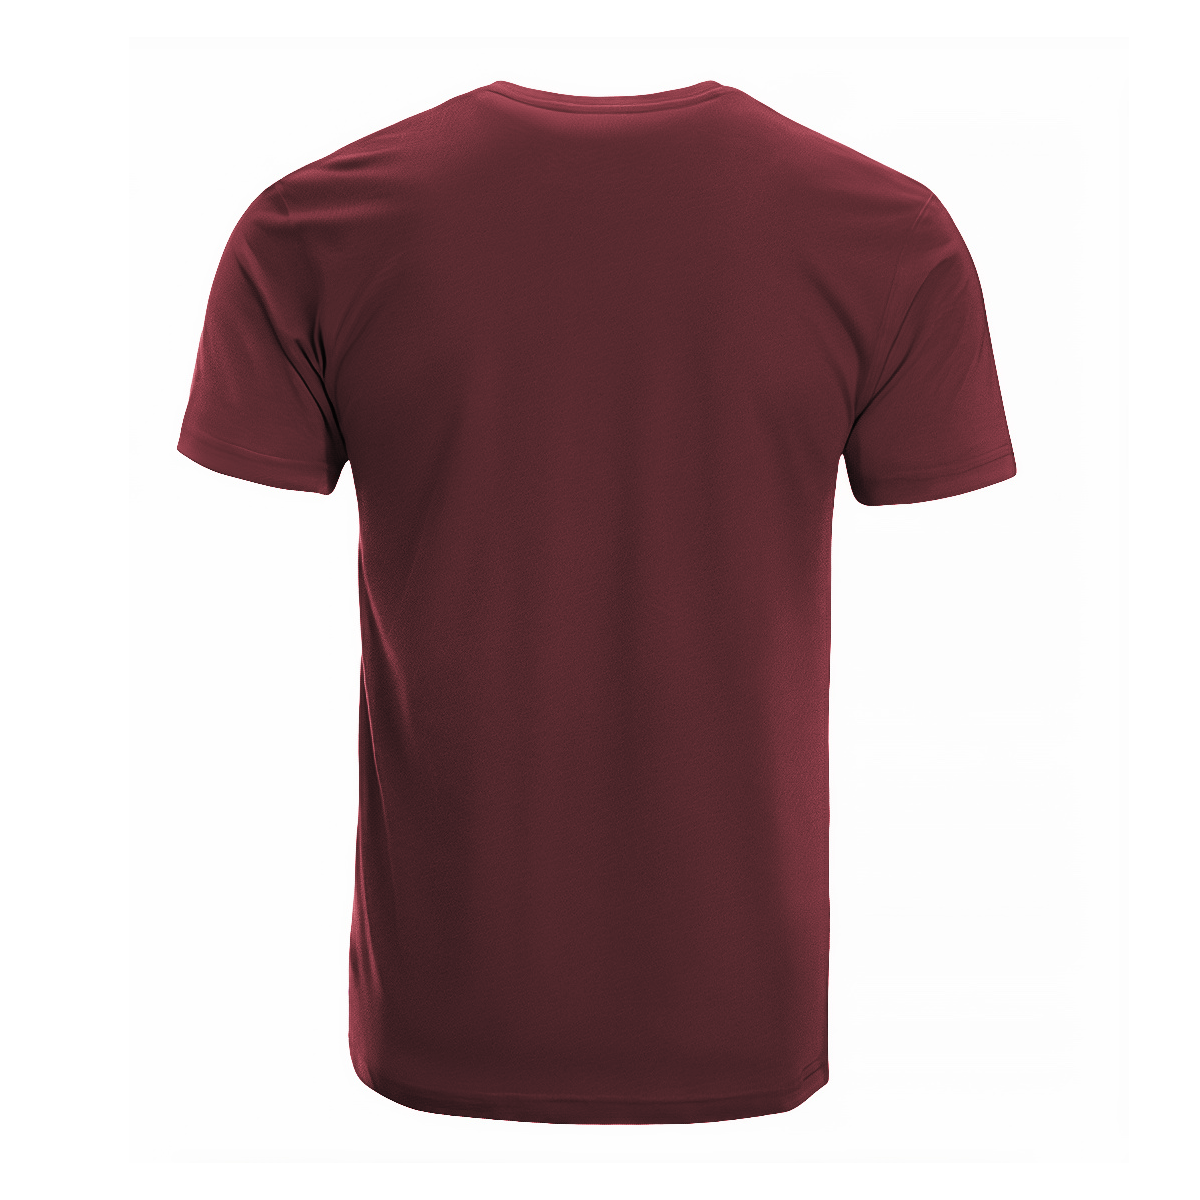 Wedderburn Tartan Crest T-shirt - I'm not yelling style